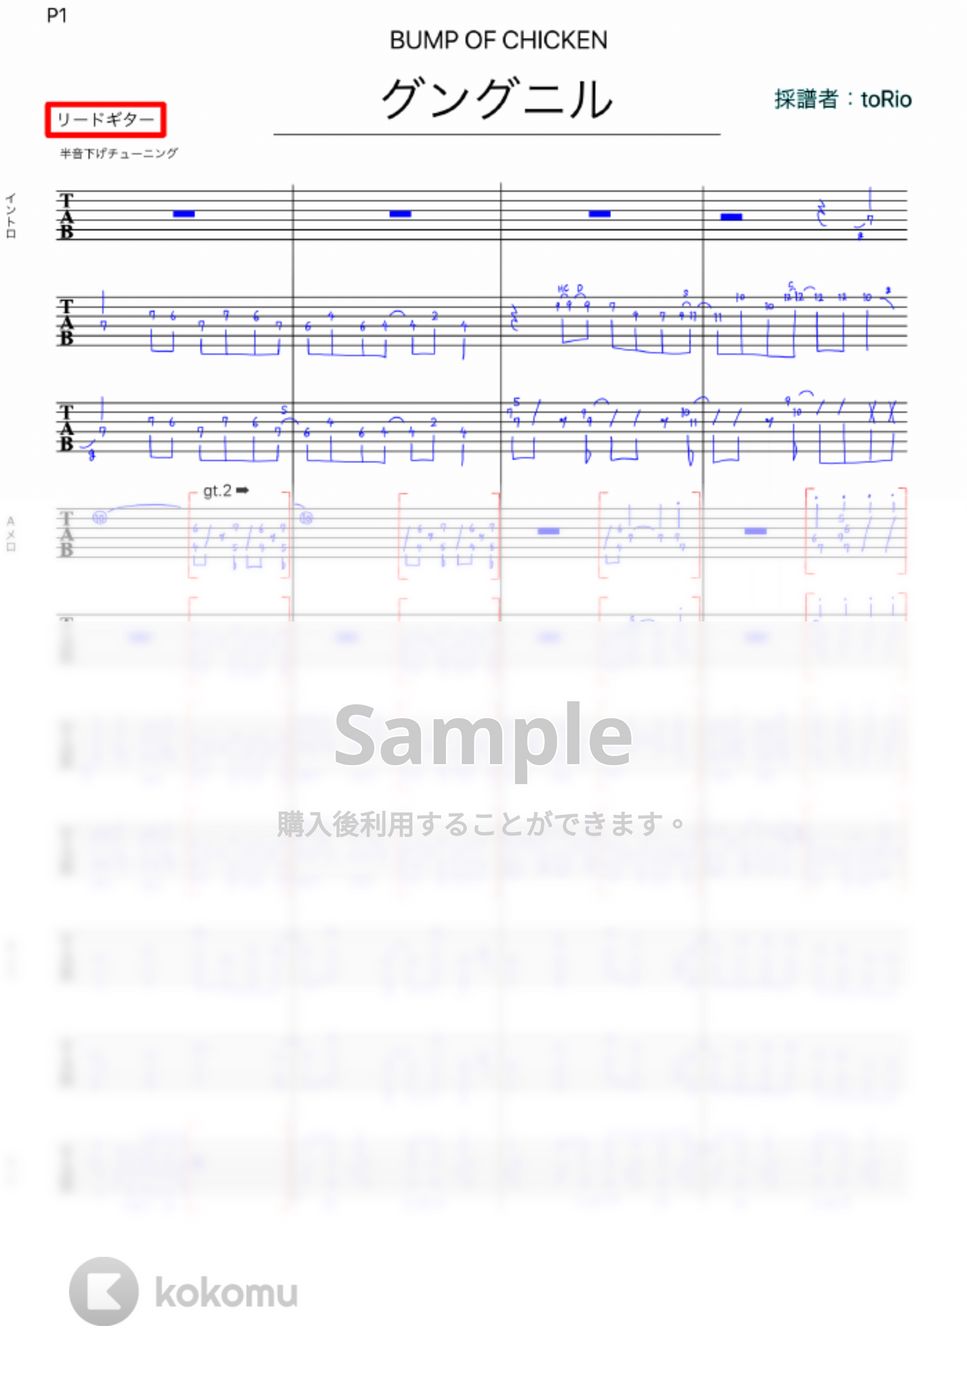 BUMP OF CHICKEN - グングニル (リードギターTAB譜) by toRio